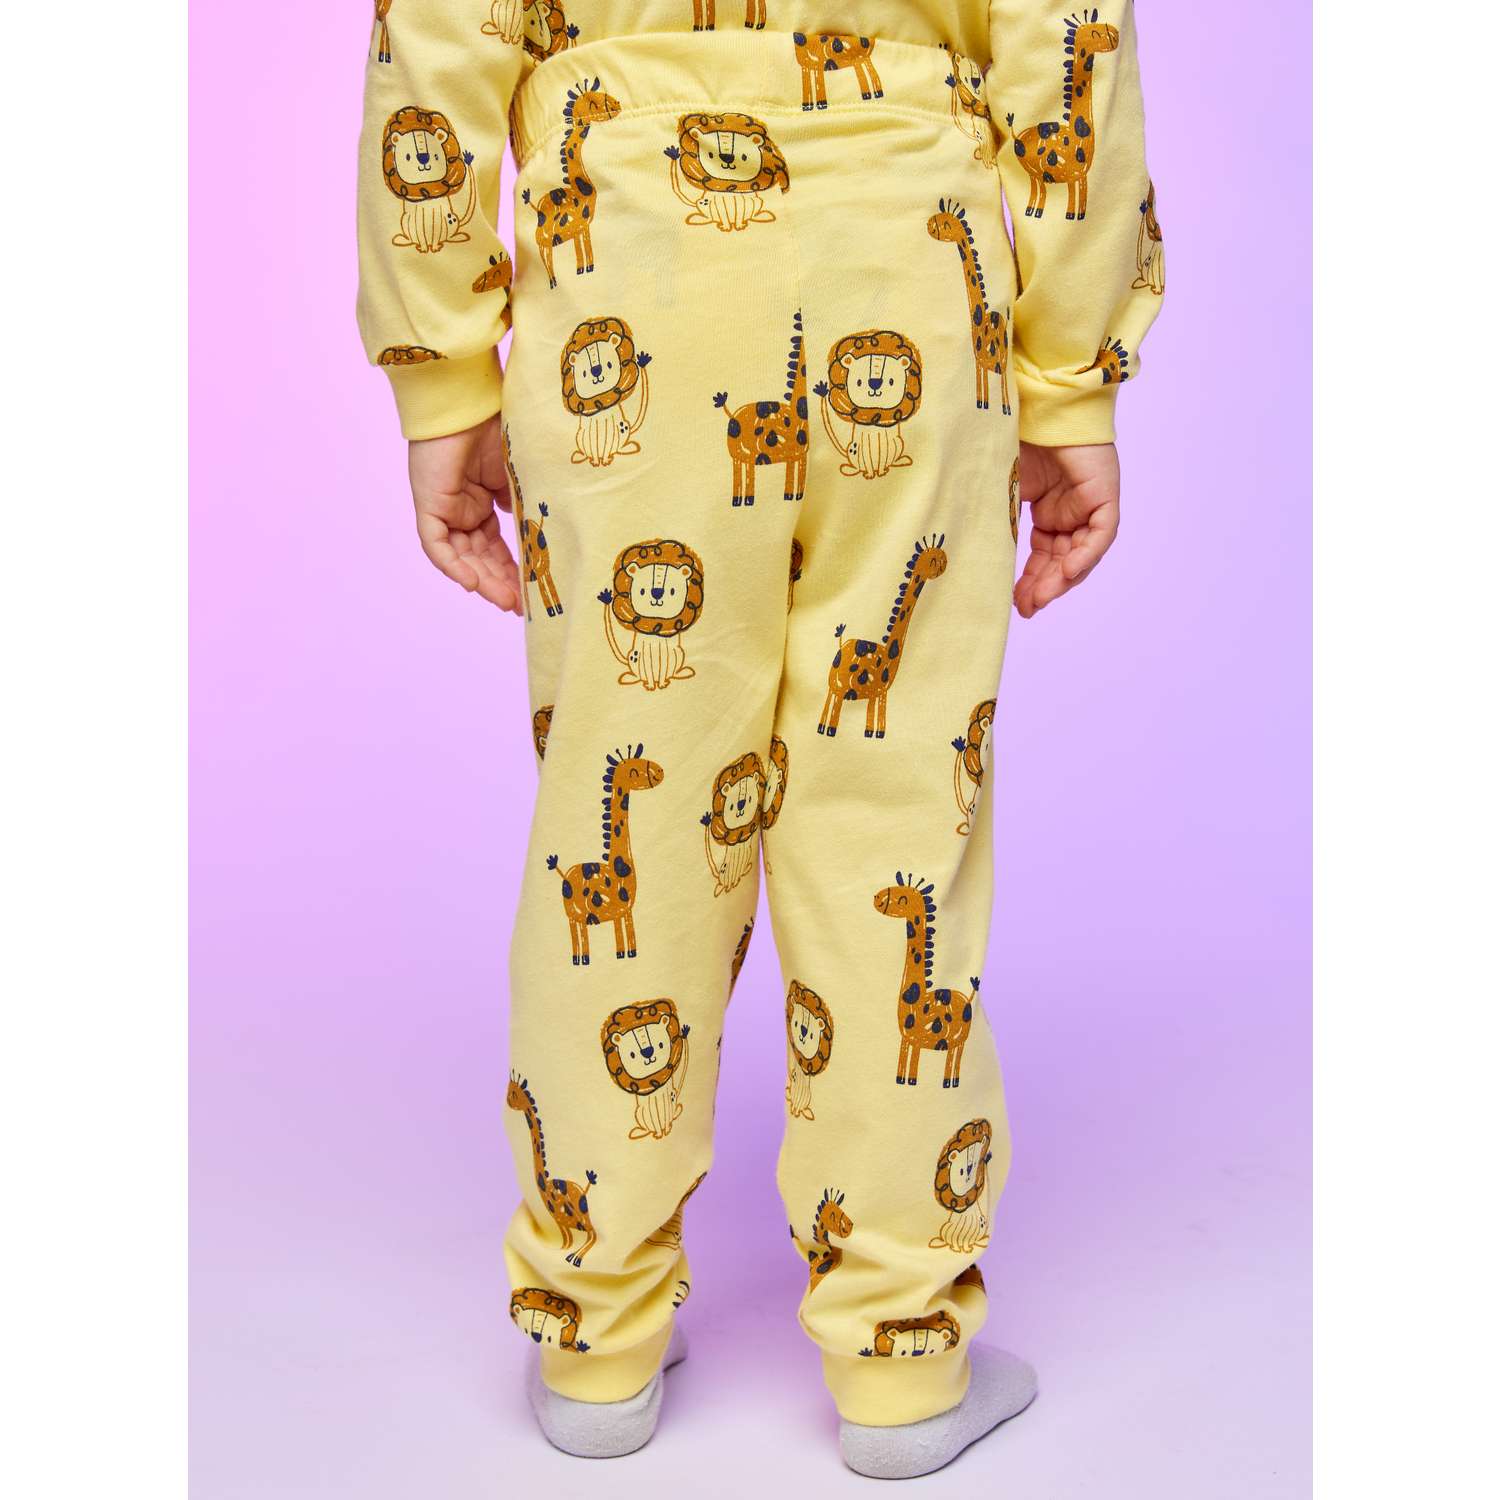 Пижама ISSHOP пижама со штанами желтая - фото 6